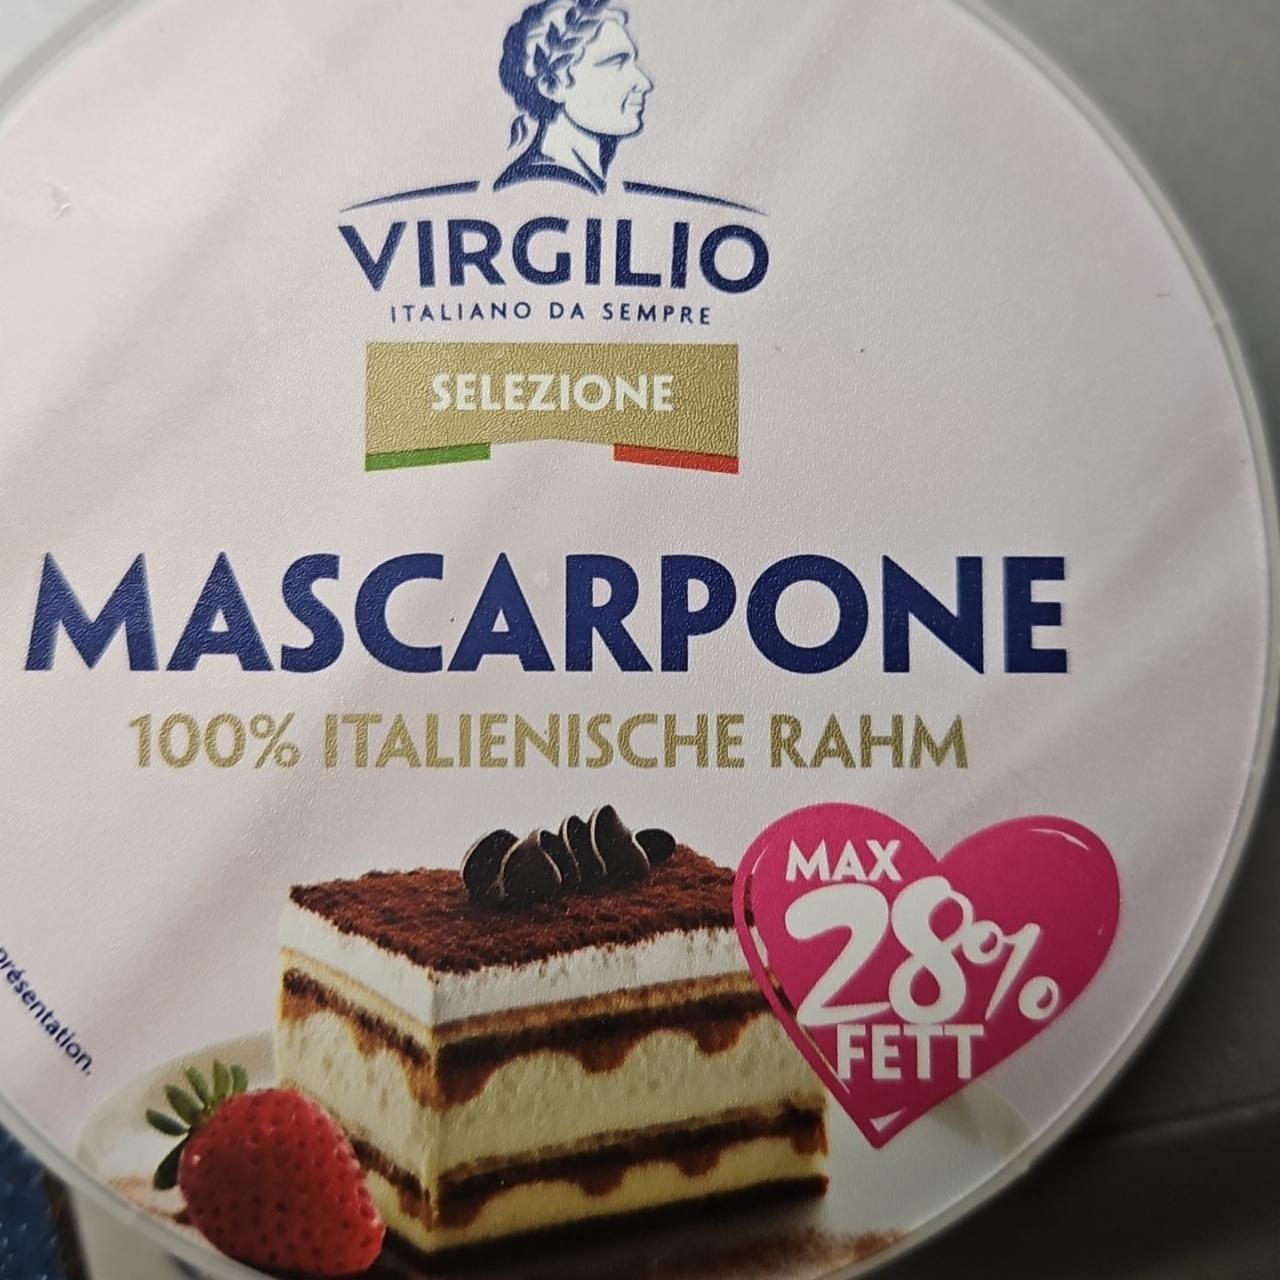 Fotografie - Mascarpone 100% Italienische rahm max 28% fett Virgilio